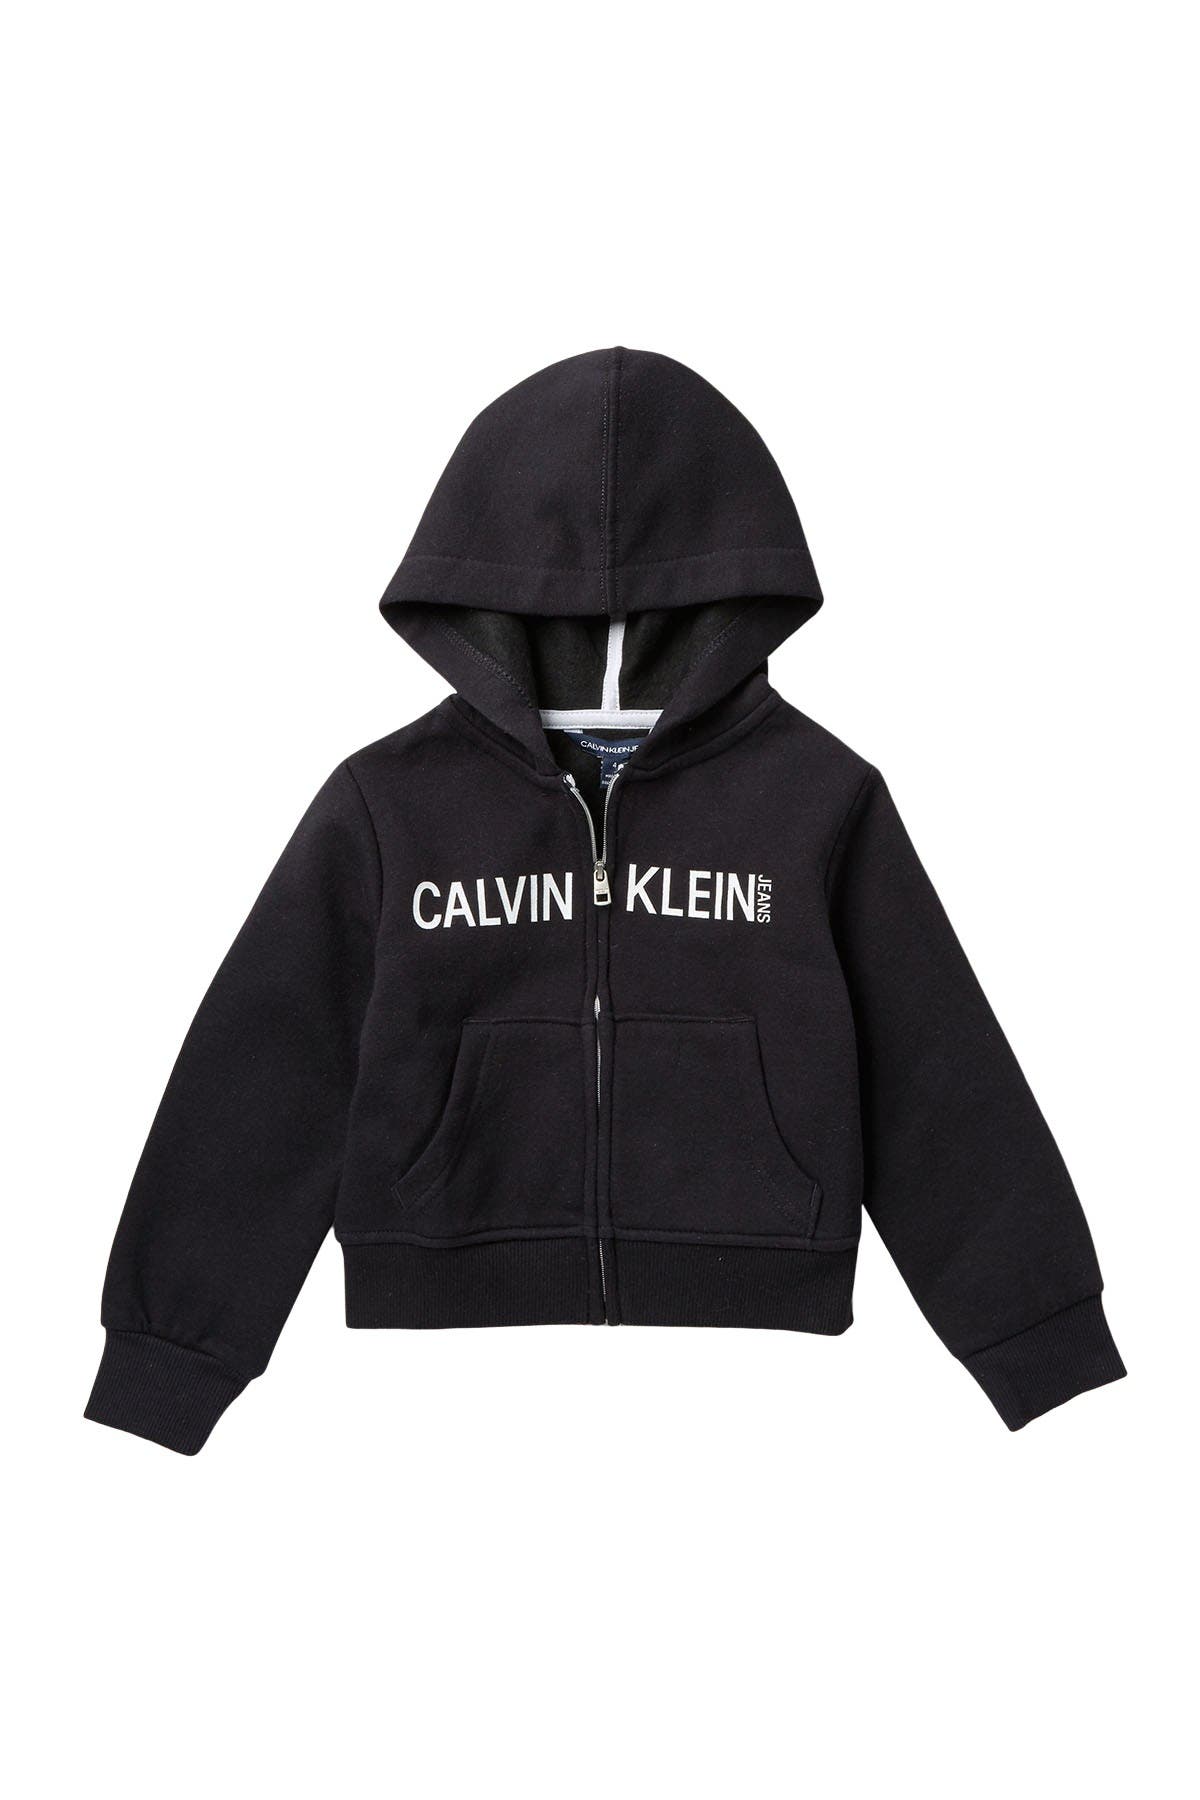 calvin klein ck hoodie